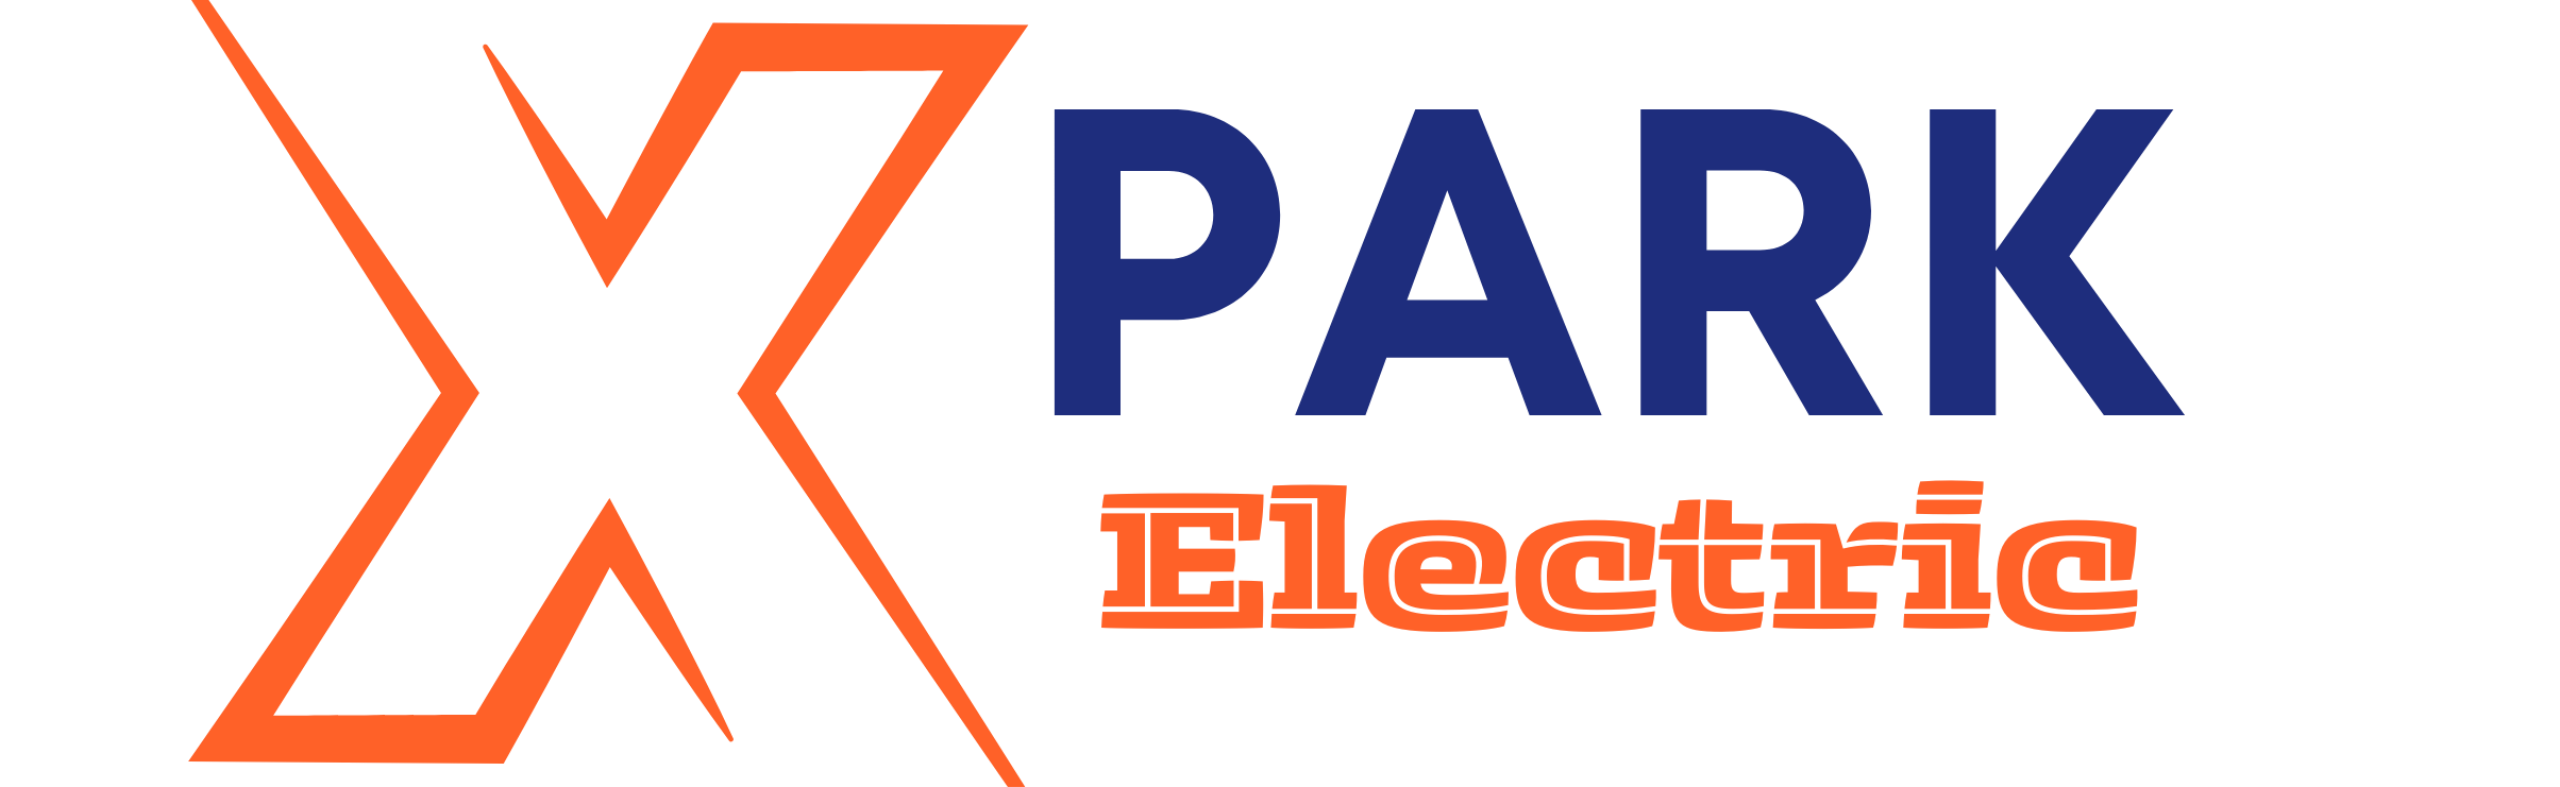 xPark Electric Rides Logo